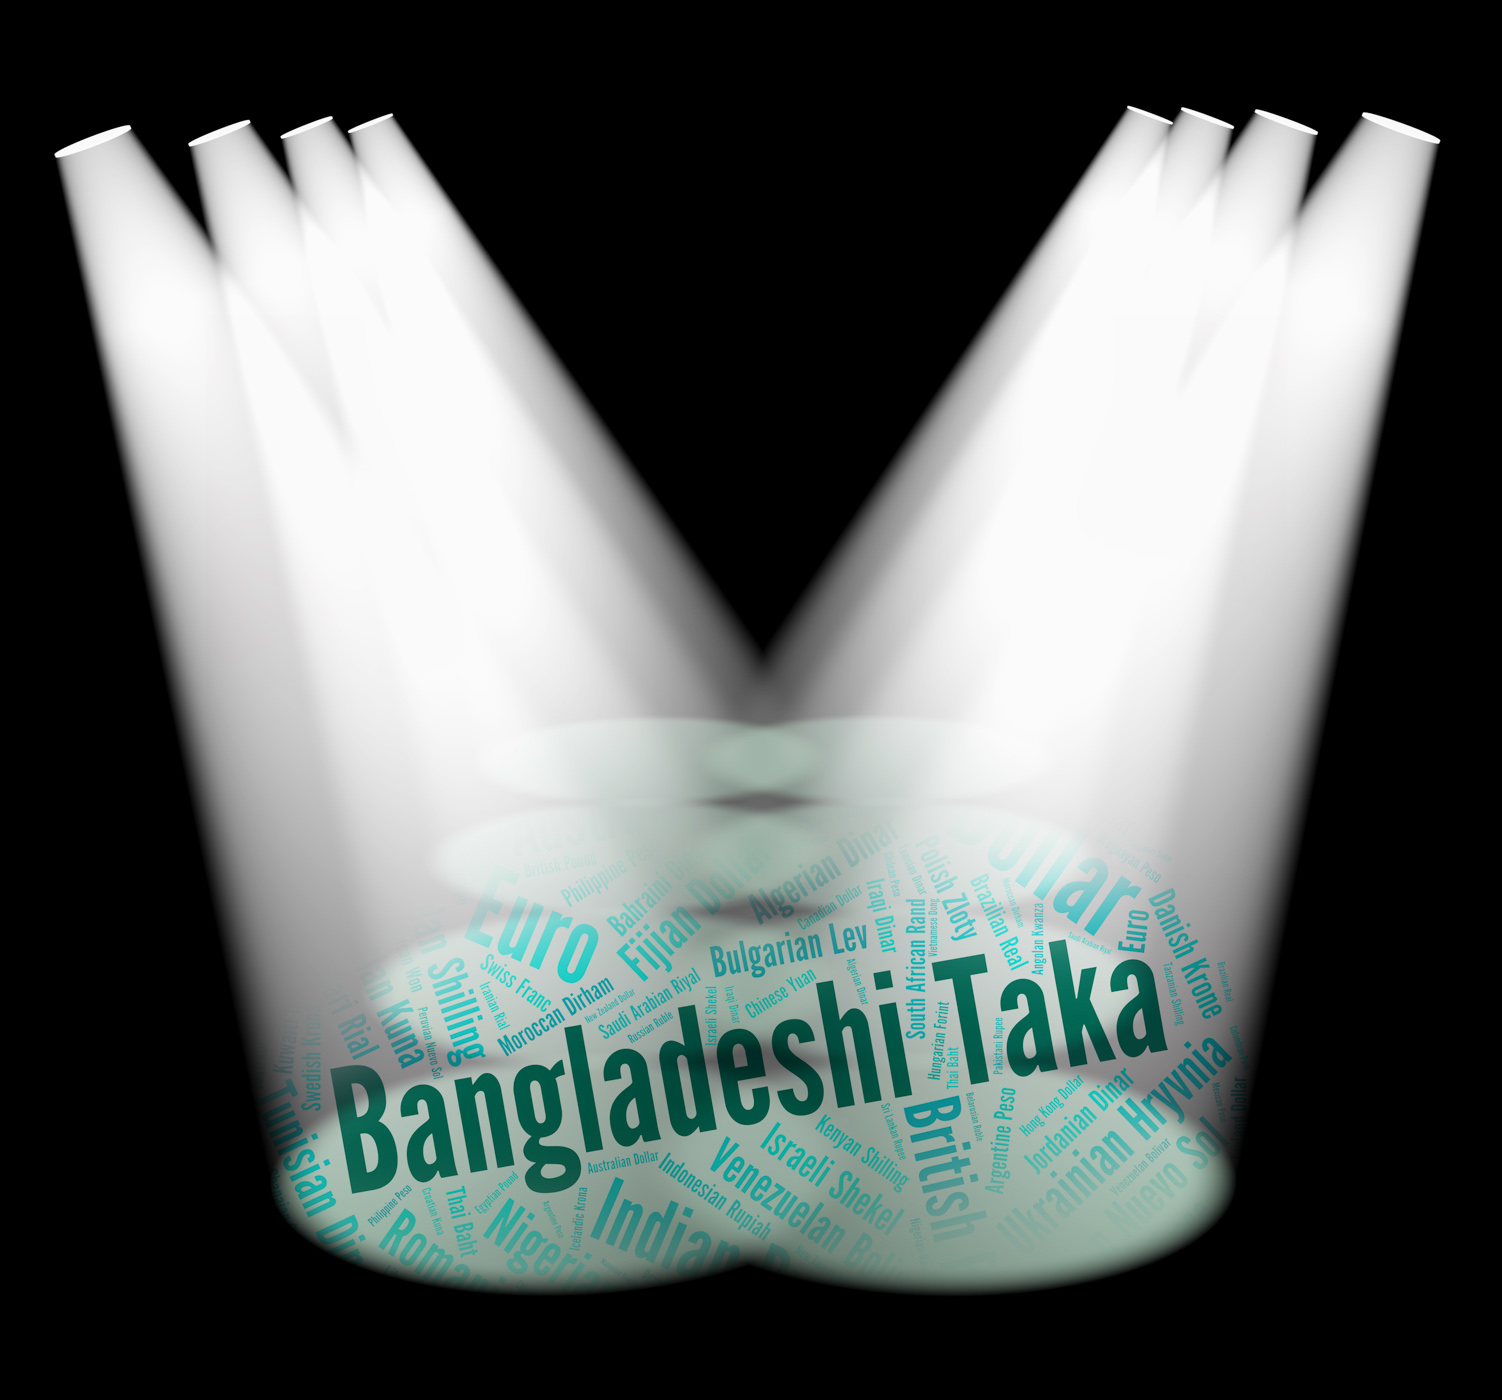 Bangladeshi taka represents foreign exchange and coinage photo